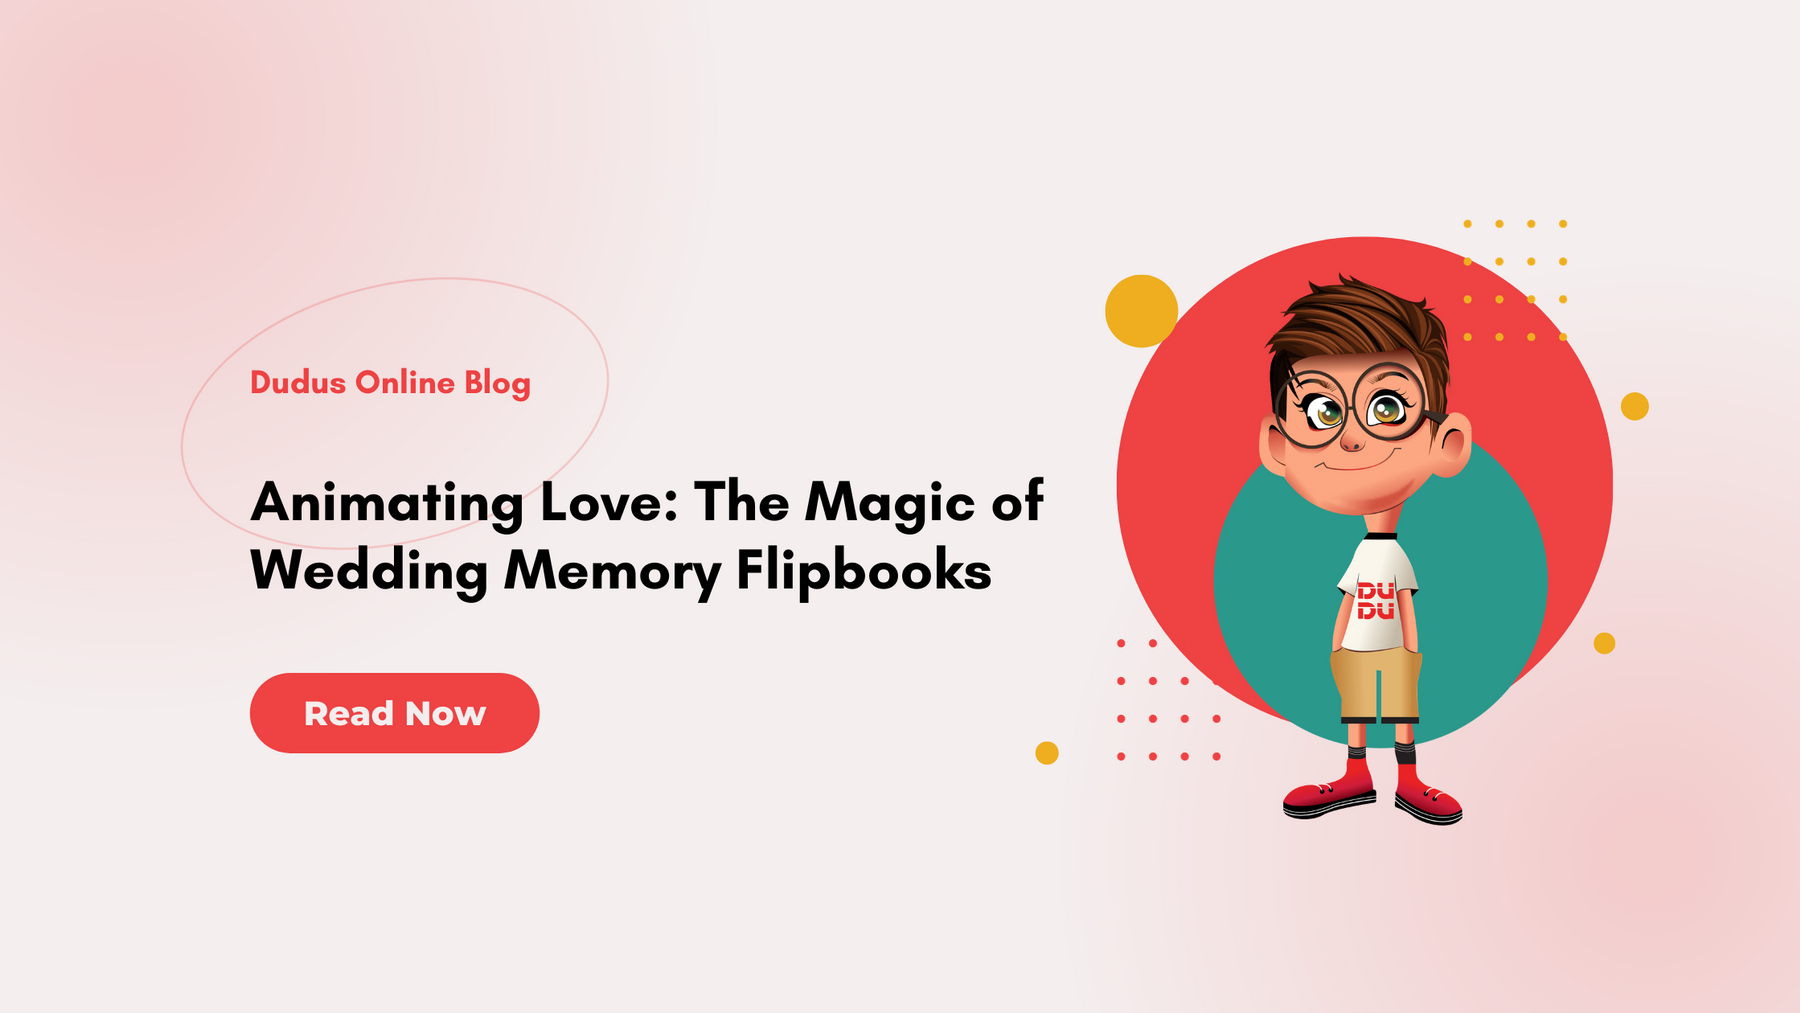 Animating Love: The Magic of Wedding Memory Flipbooks